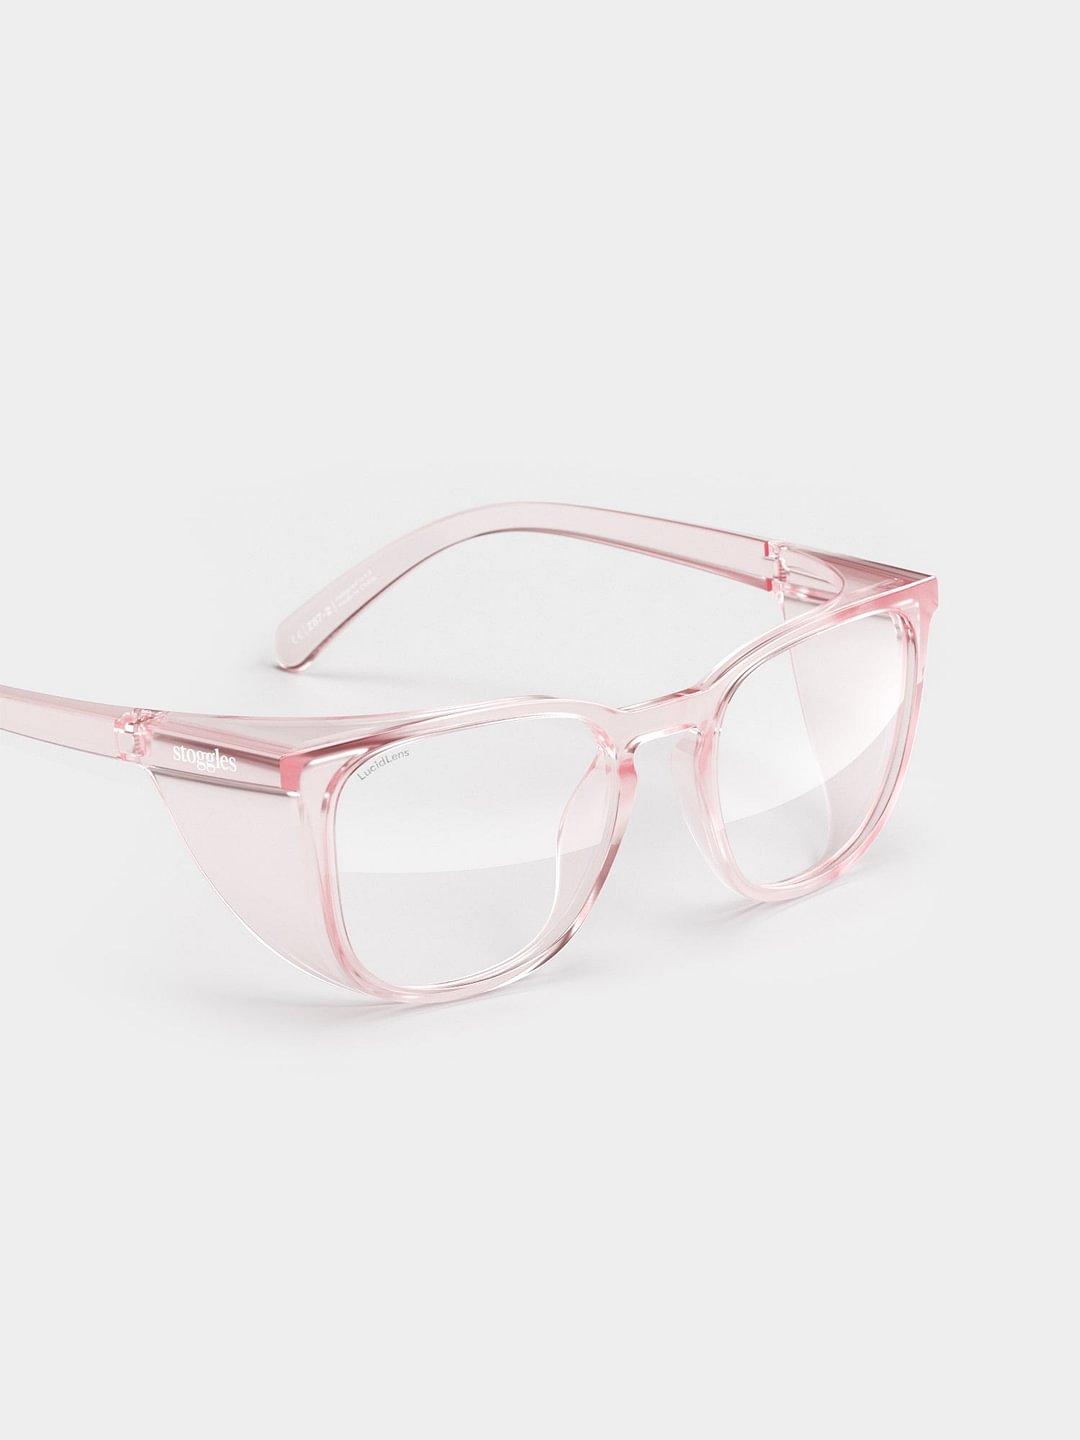 Square  Anti-blue light glasses, anti-fog and anti-dust droplet pollen glasses, polarized photochromic glasses